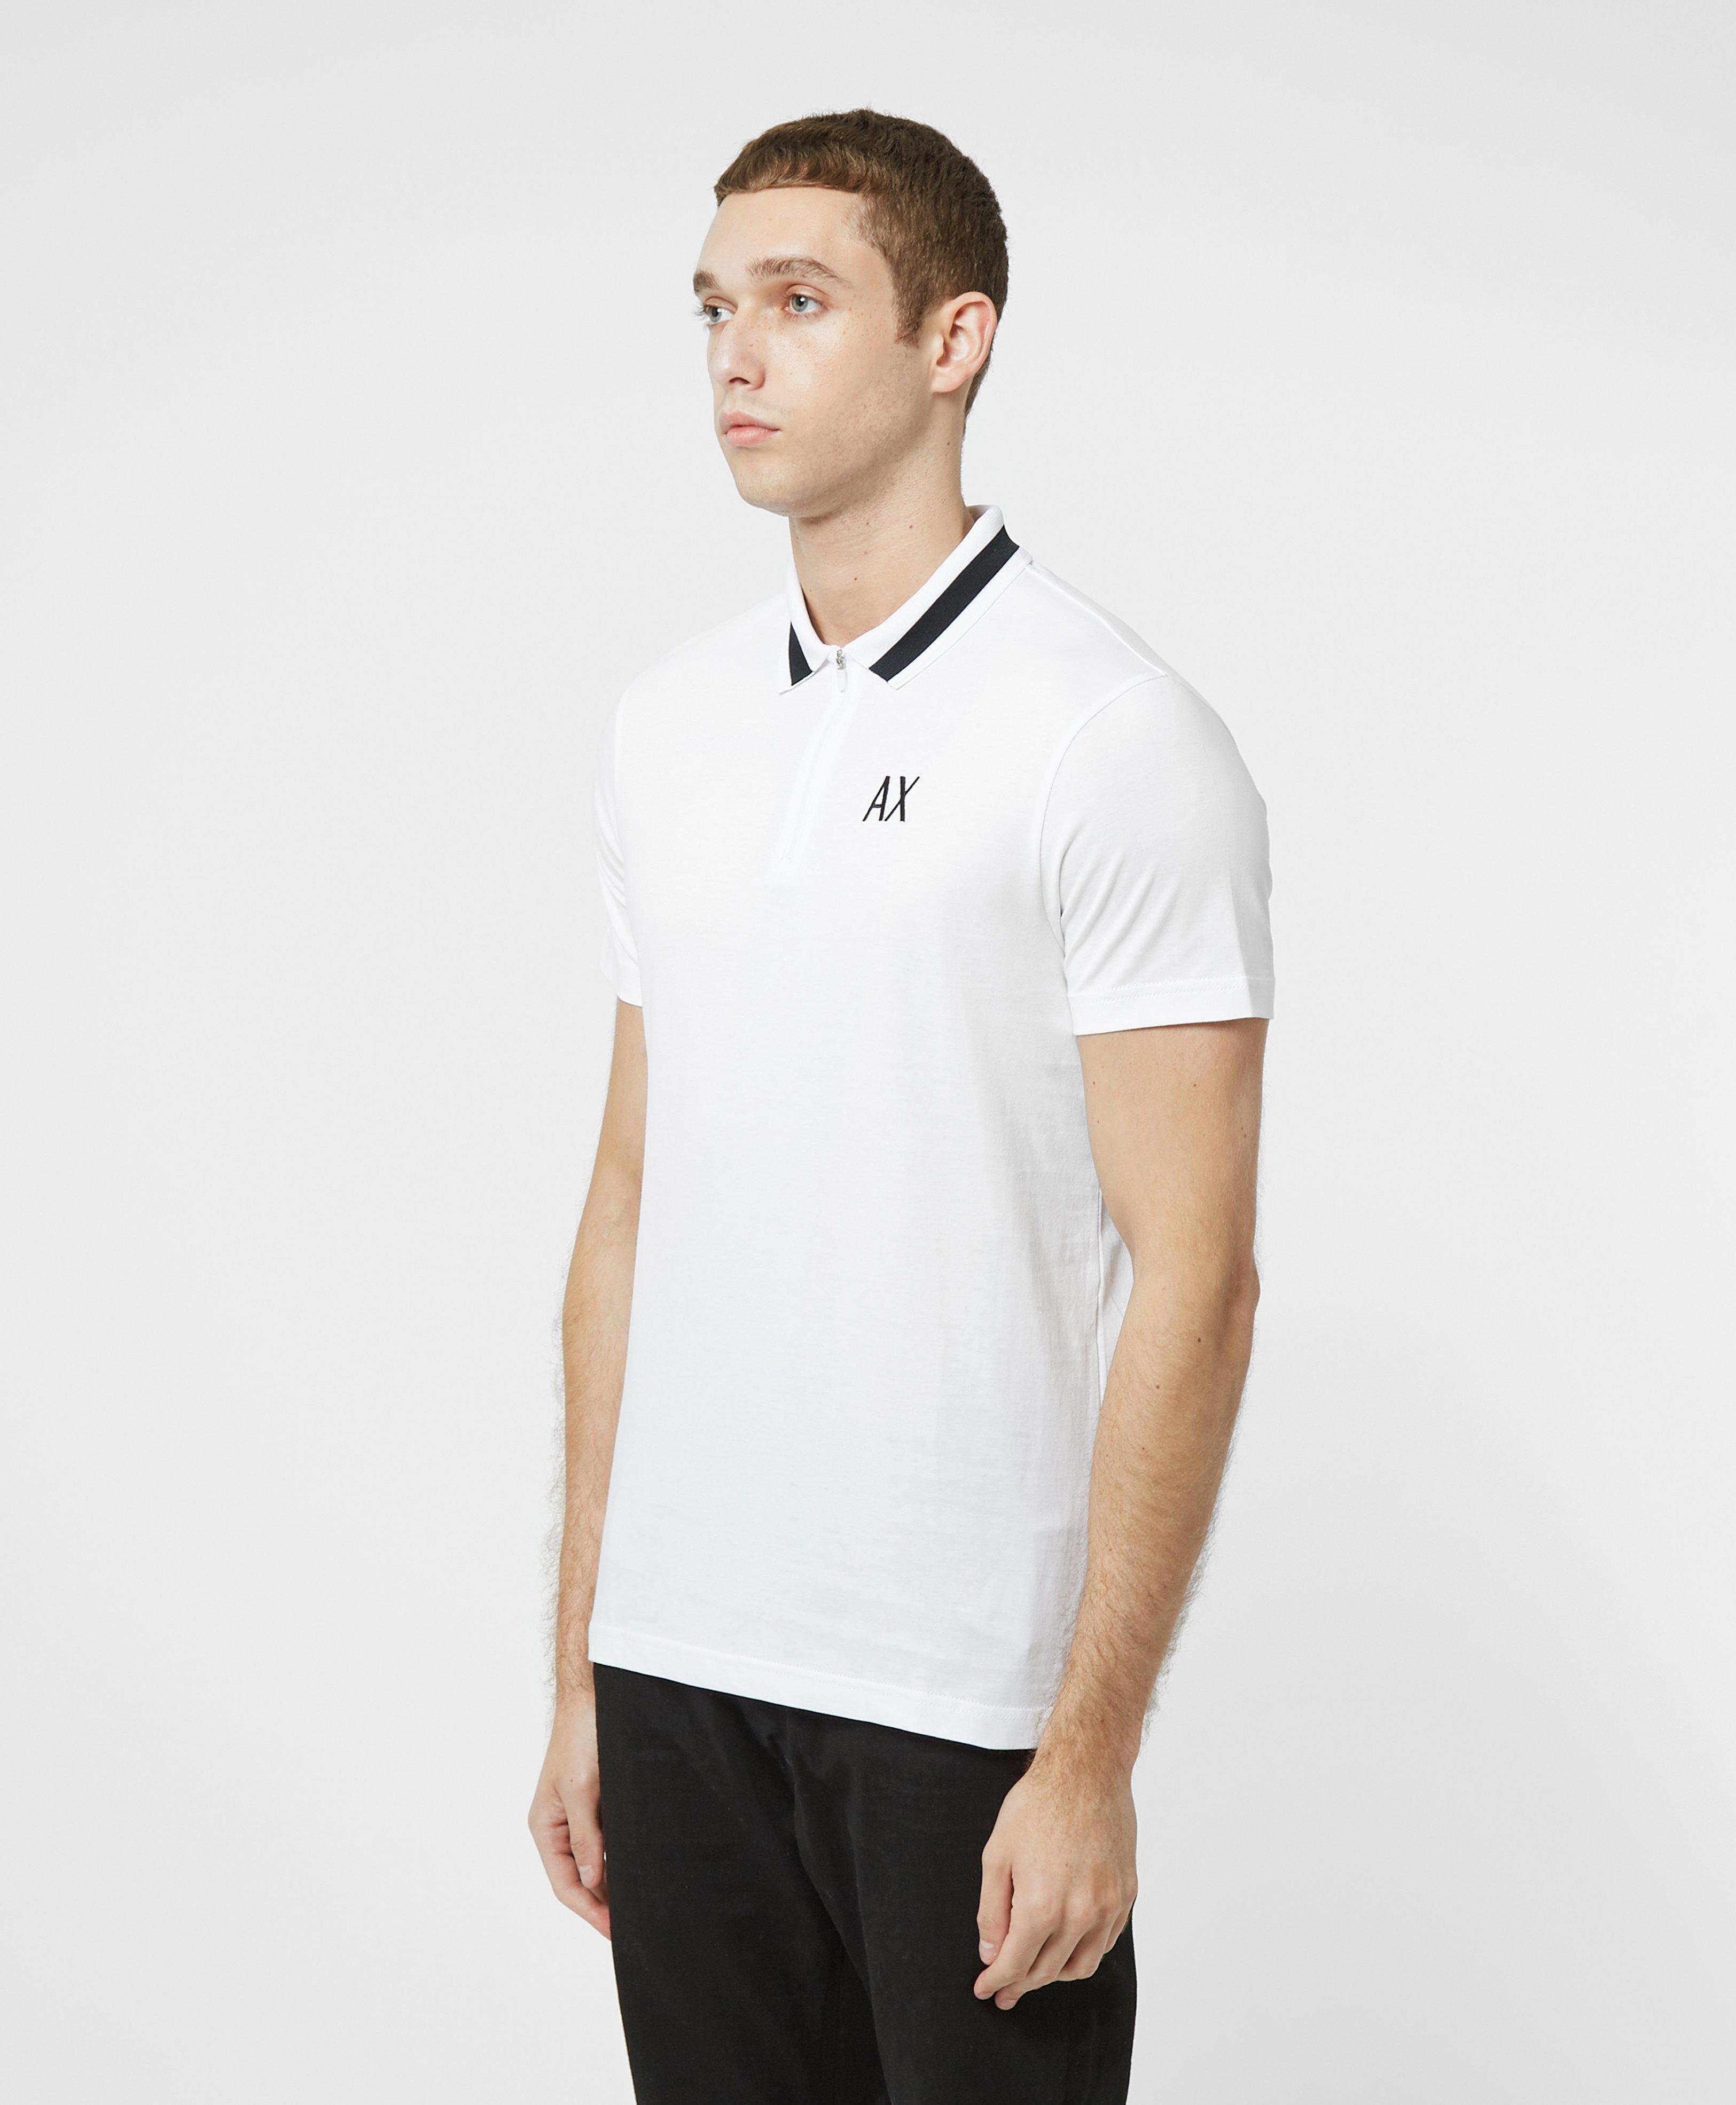 Armani Exchange Trim Collar Short Sleeve Polo Shirt in White for Men - Lyst